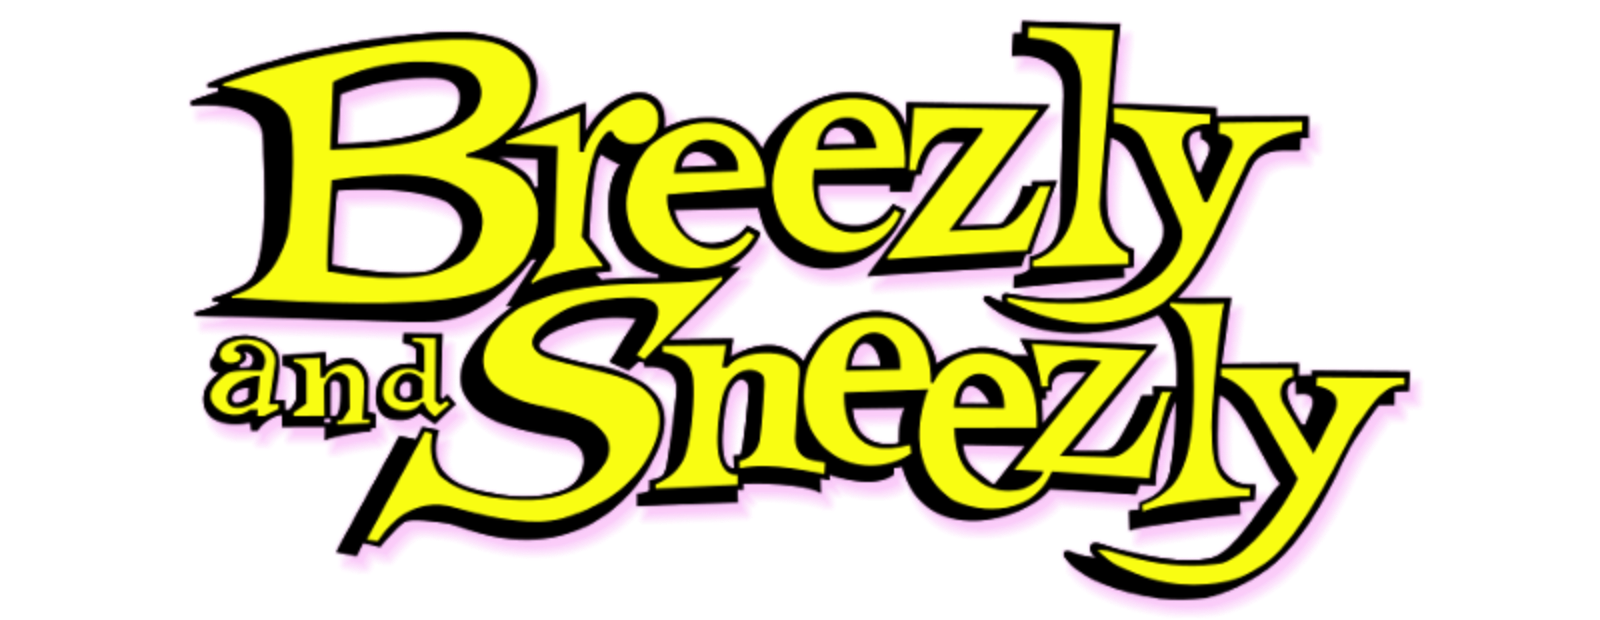 Breezly and Sneezly (1 DVD Box Set)